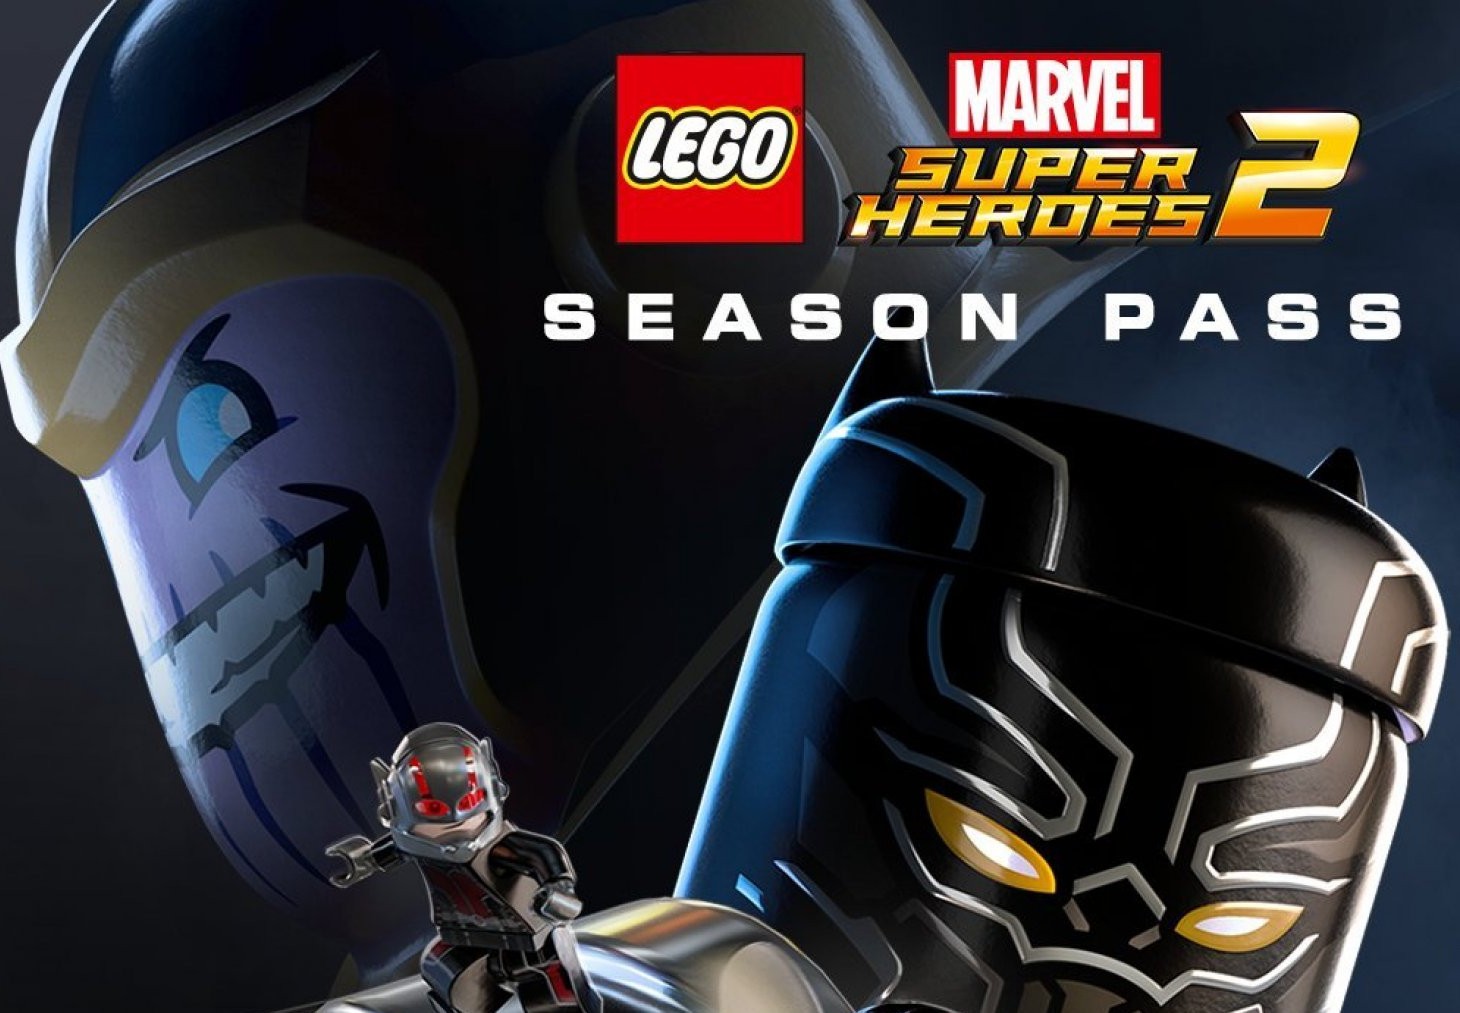 LEGO Marvel’s Avengers Season Pass